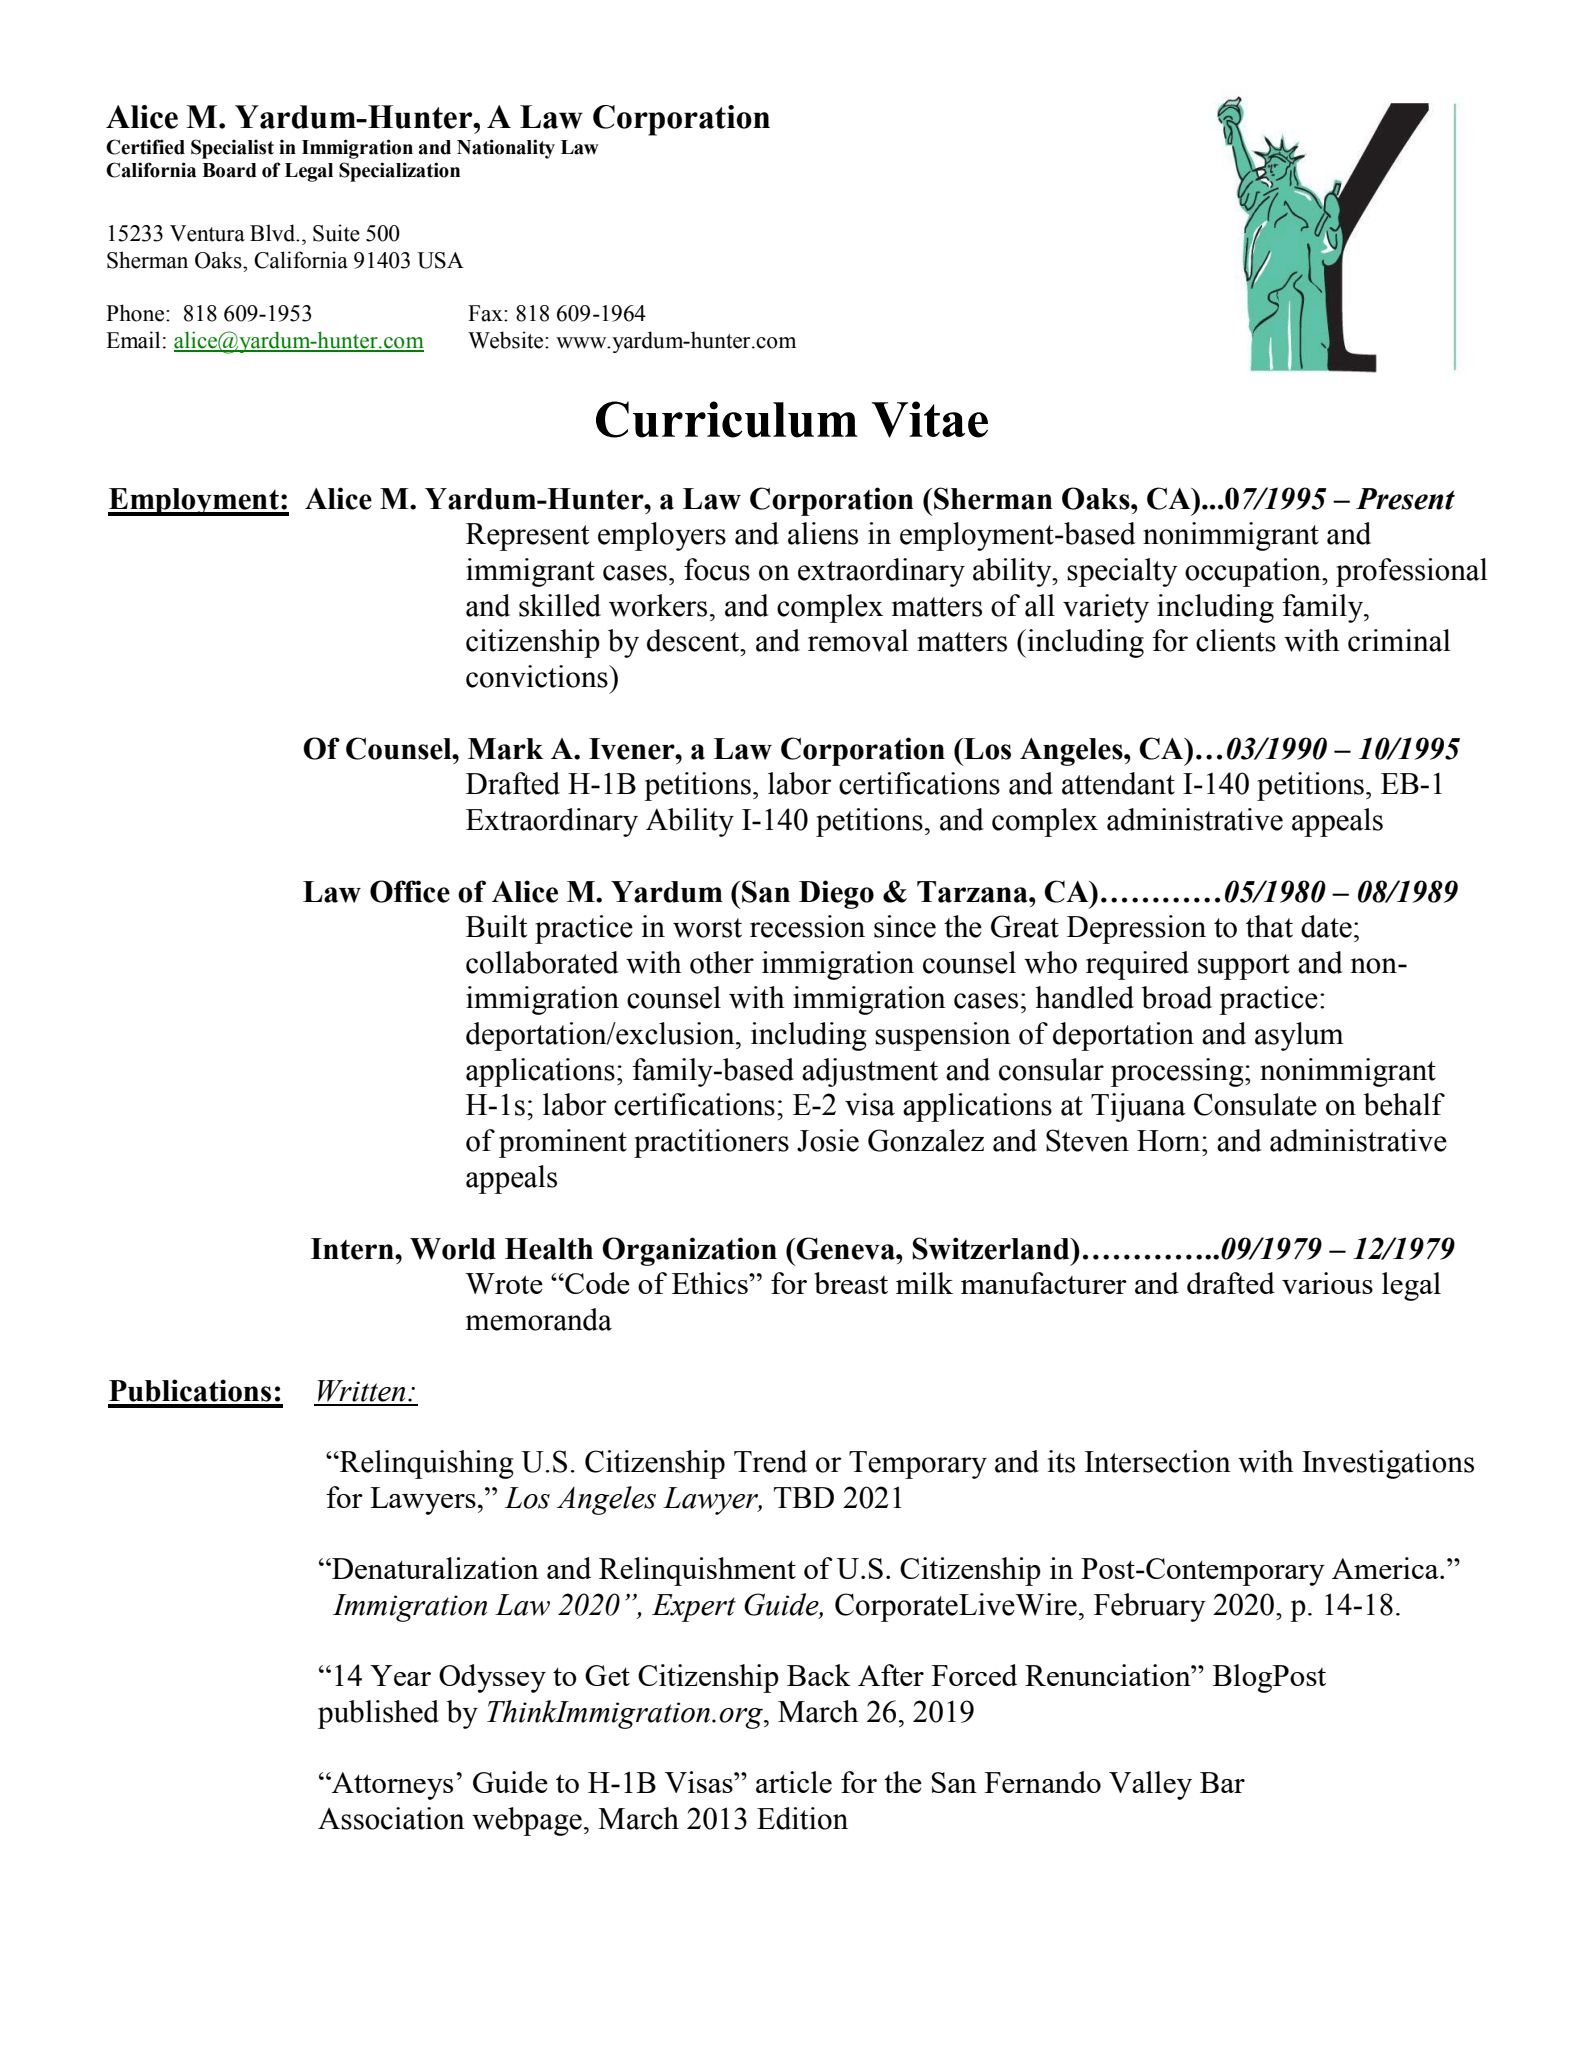 AYH Curriculum Vitae (Page 1).jpg